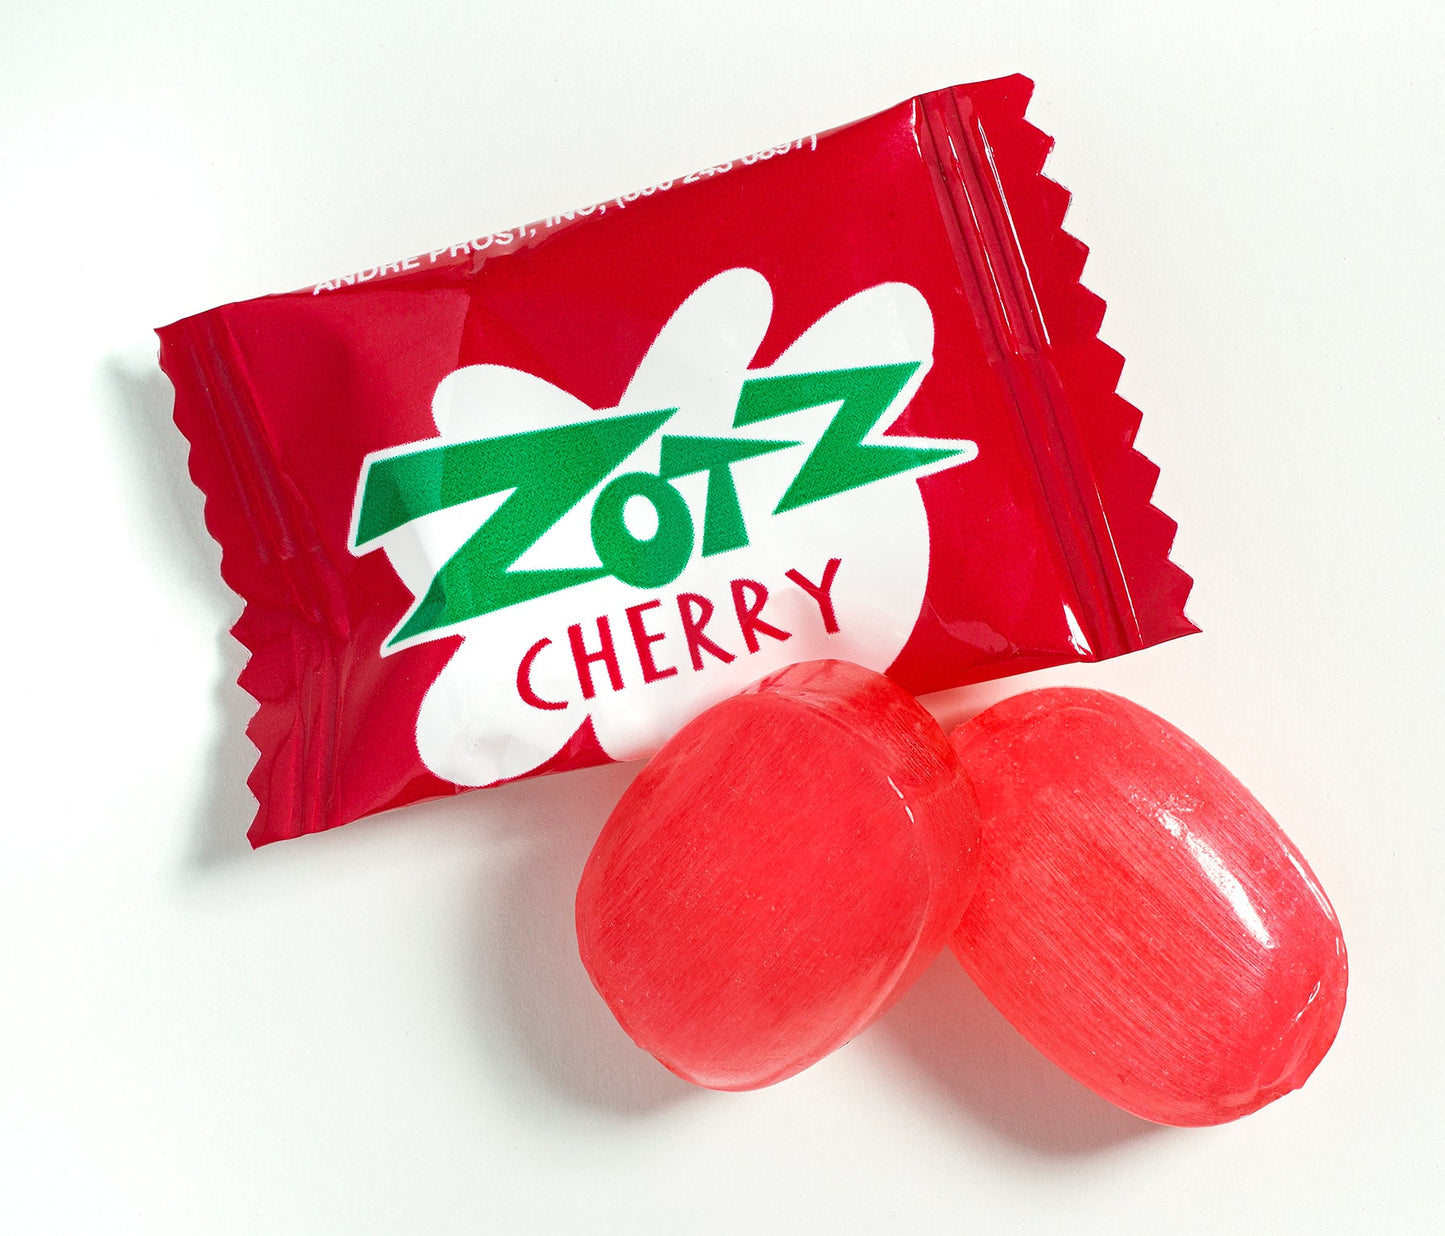 ZOTZ Cherry, CASE of 12/46 count bags